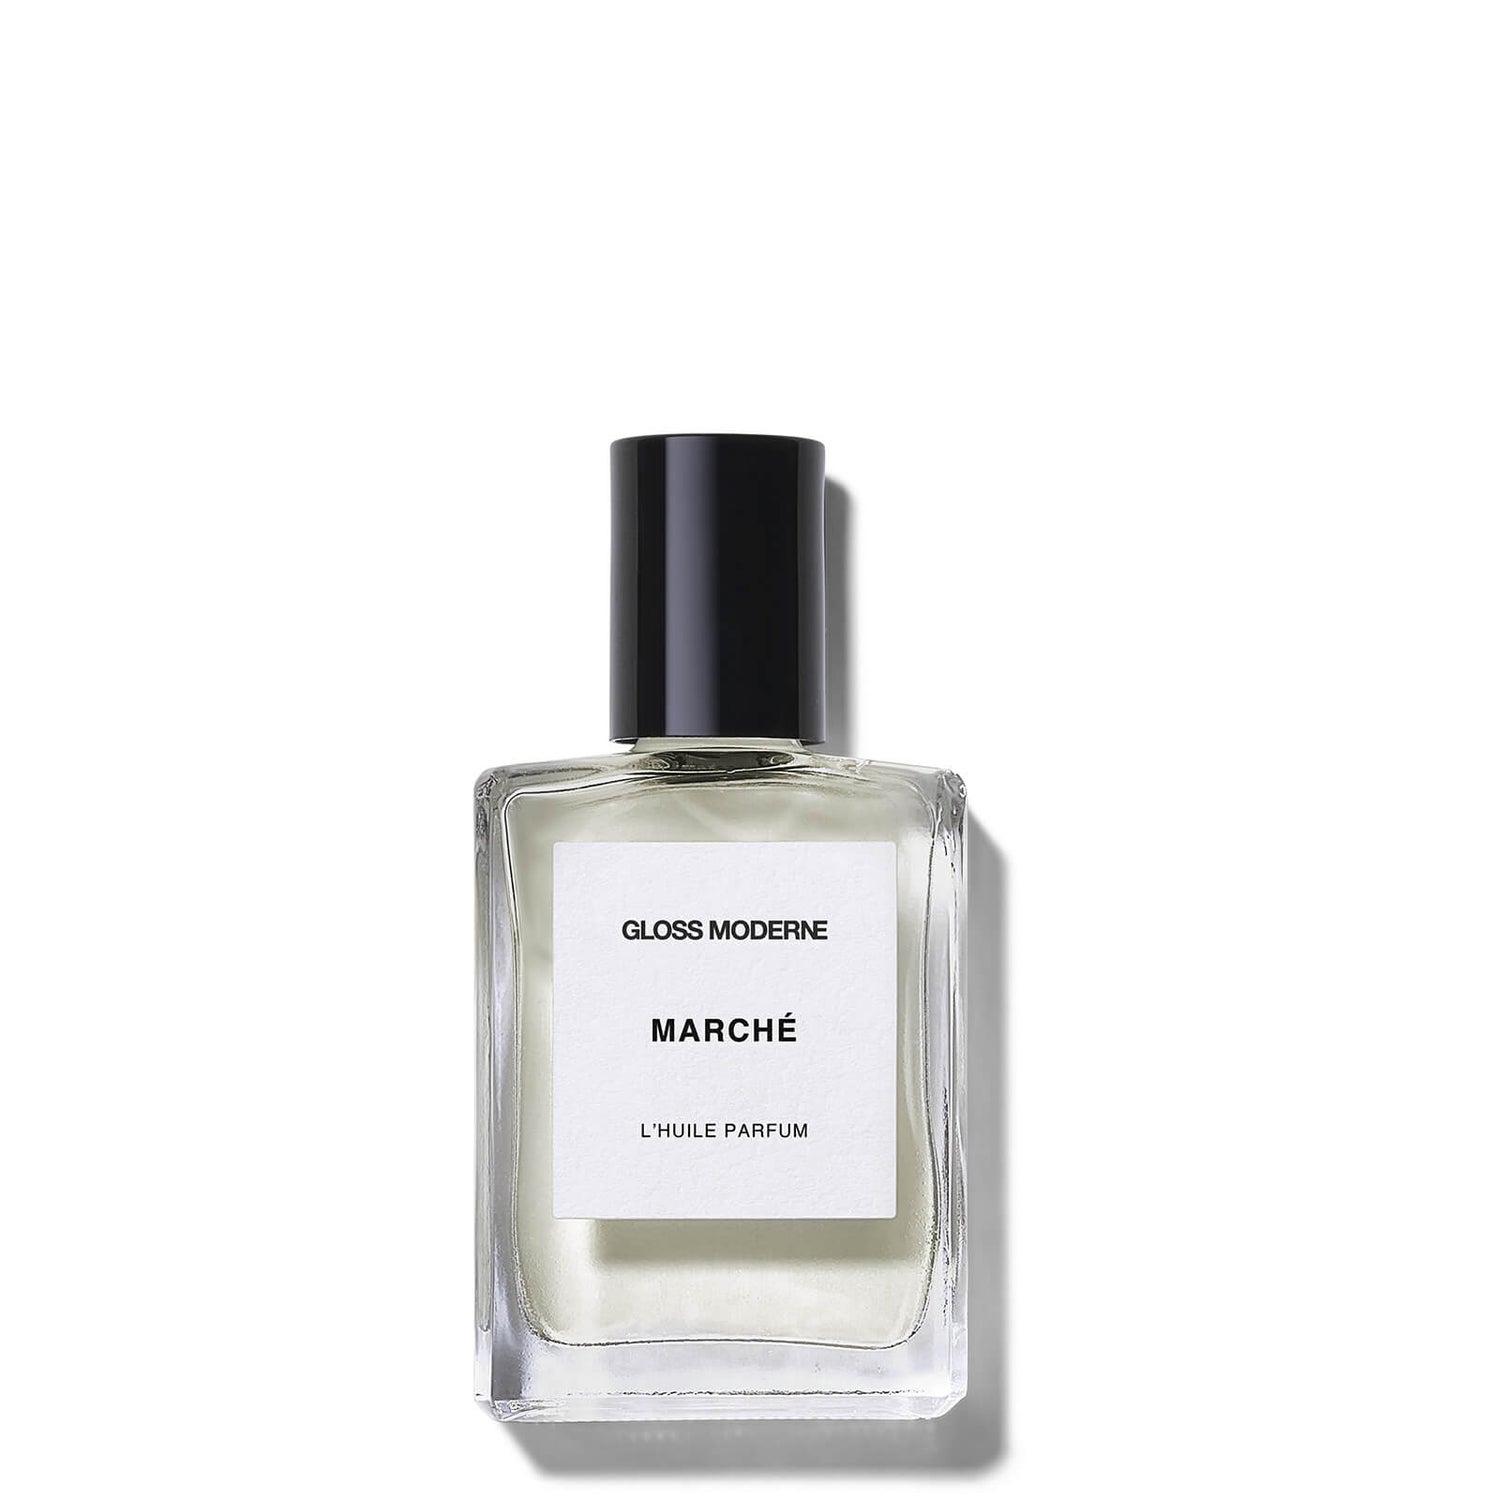 GLOSS MODERNE Clean Luxury Perfume Oil Marche 15ml - Dermstore